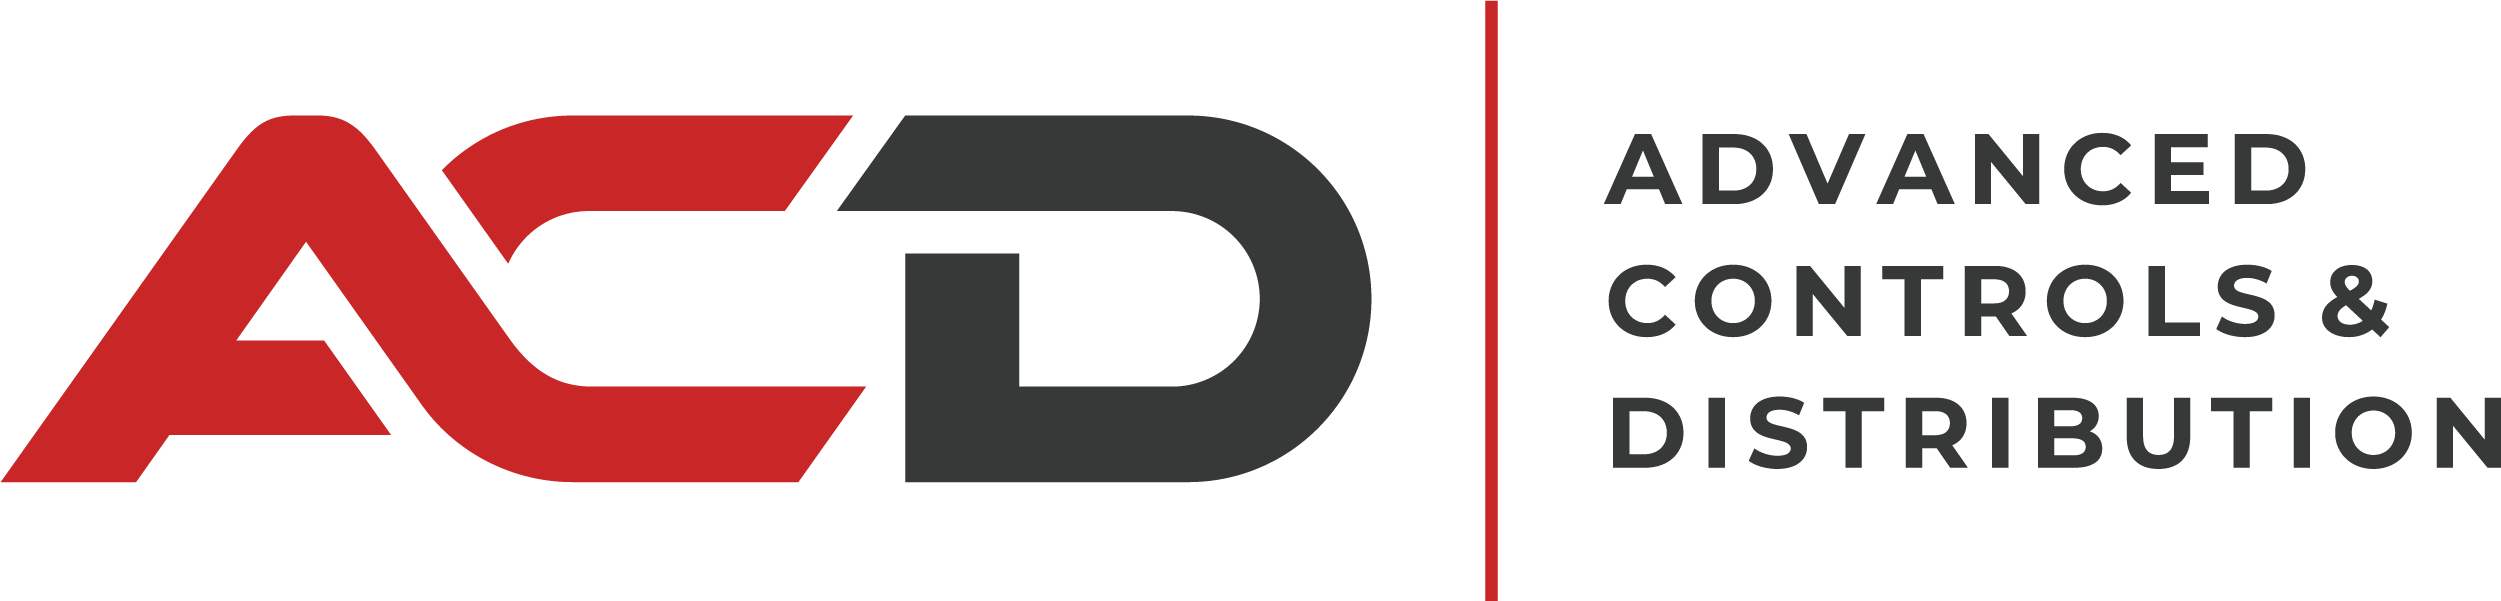 Advanced Controls & Distribution Logo